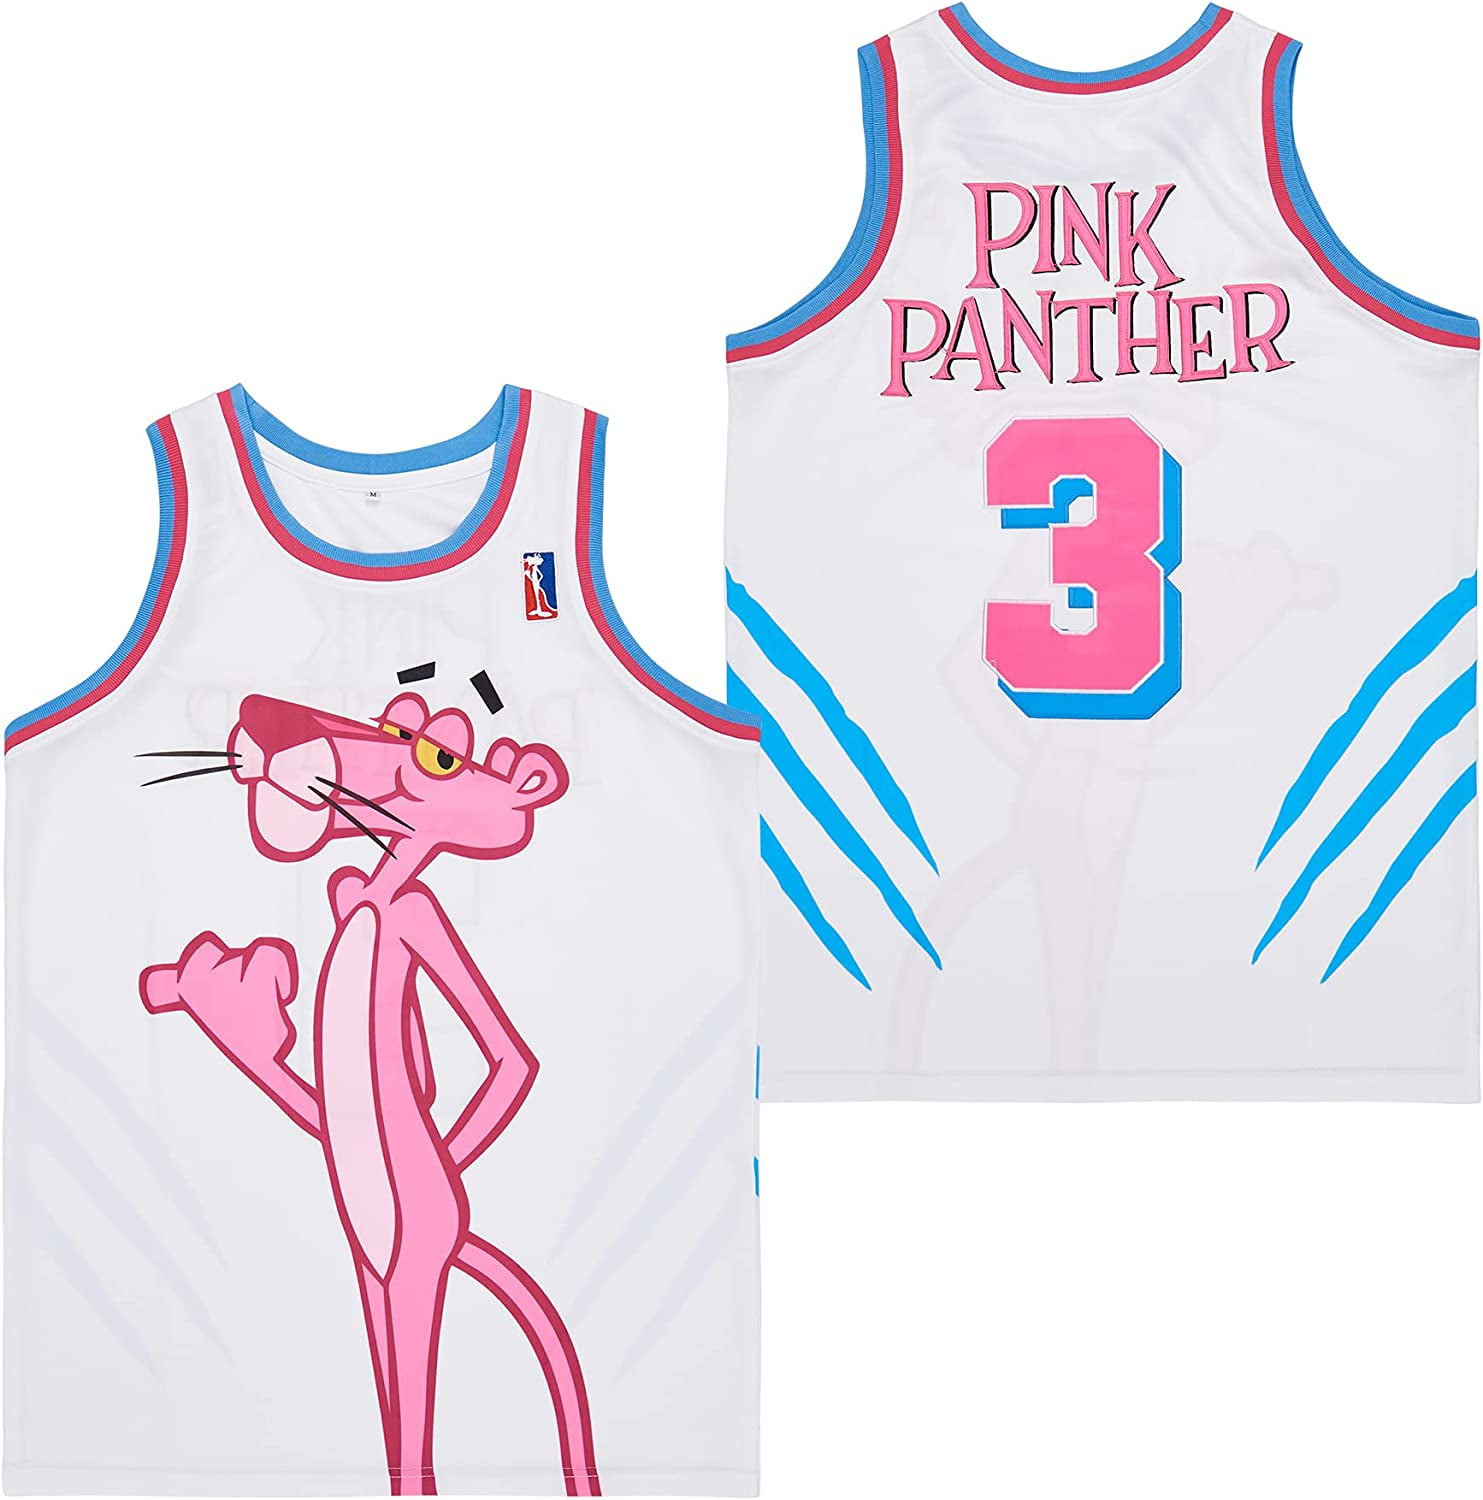 pink panther jersey